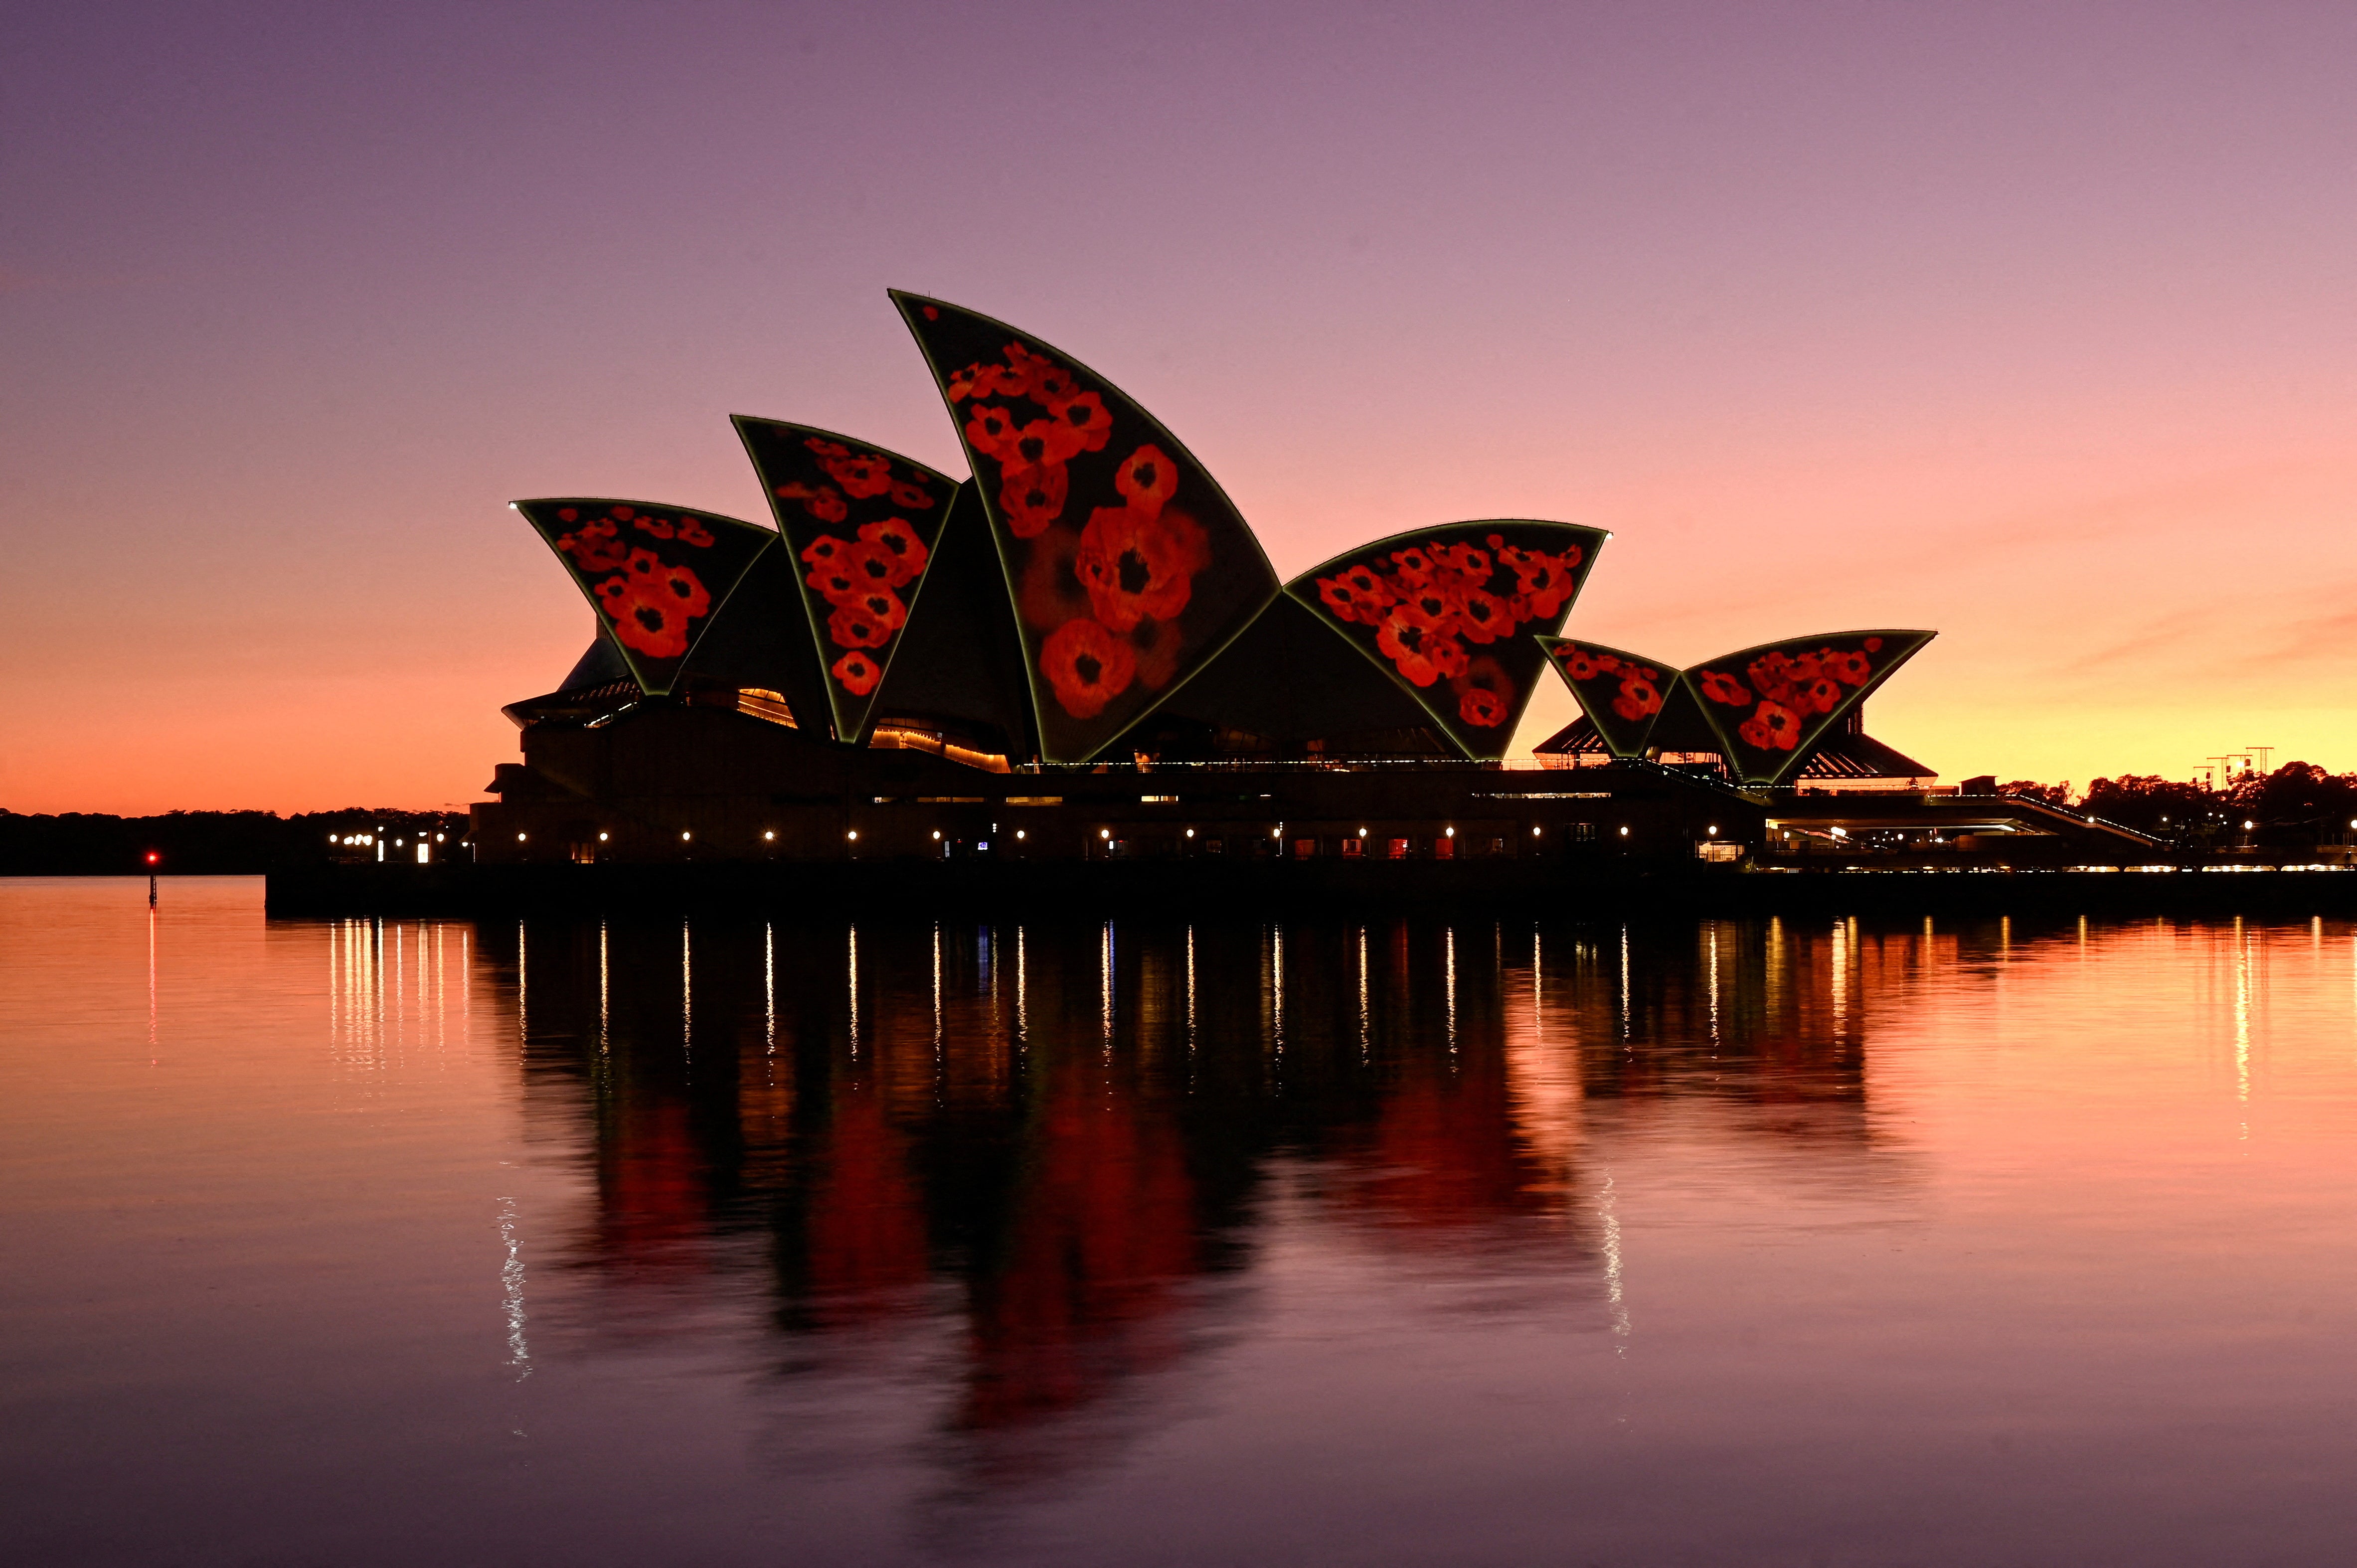 Sydney Opera House is often illuminated to celebate or mark events